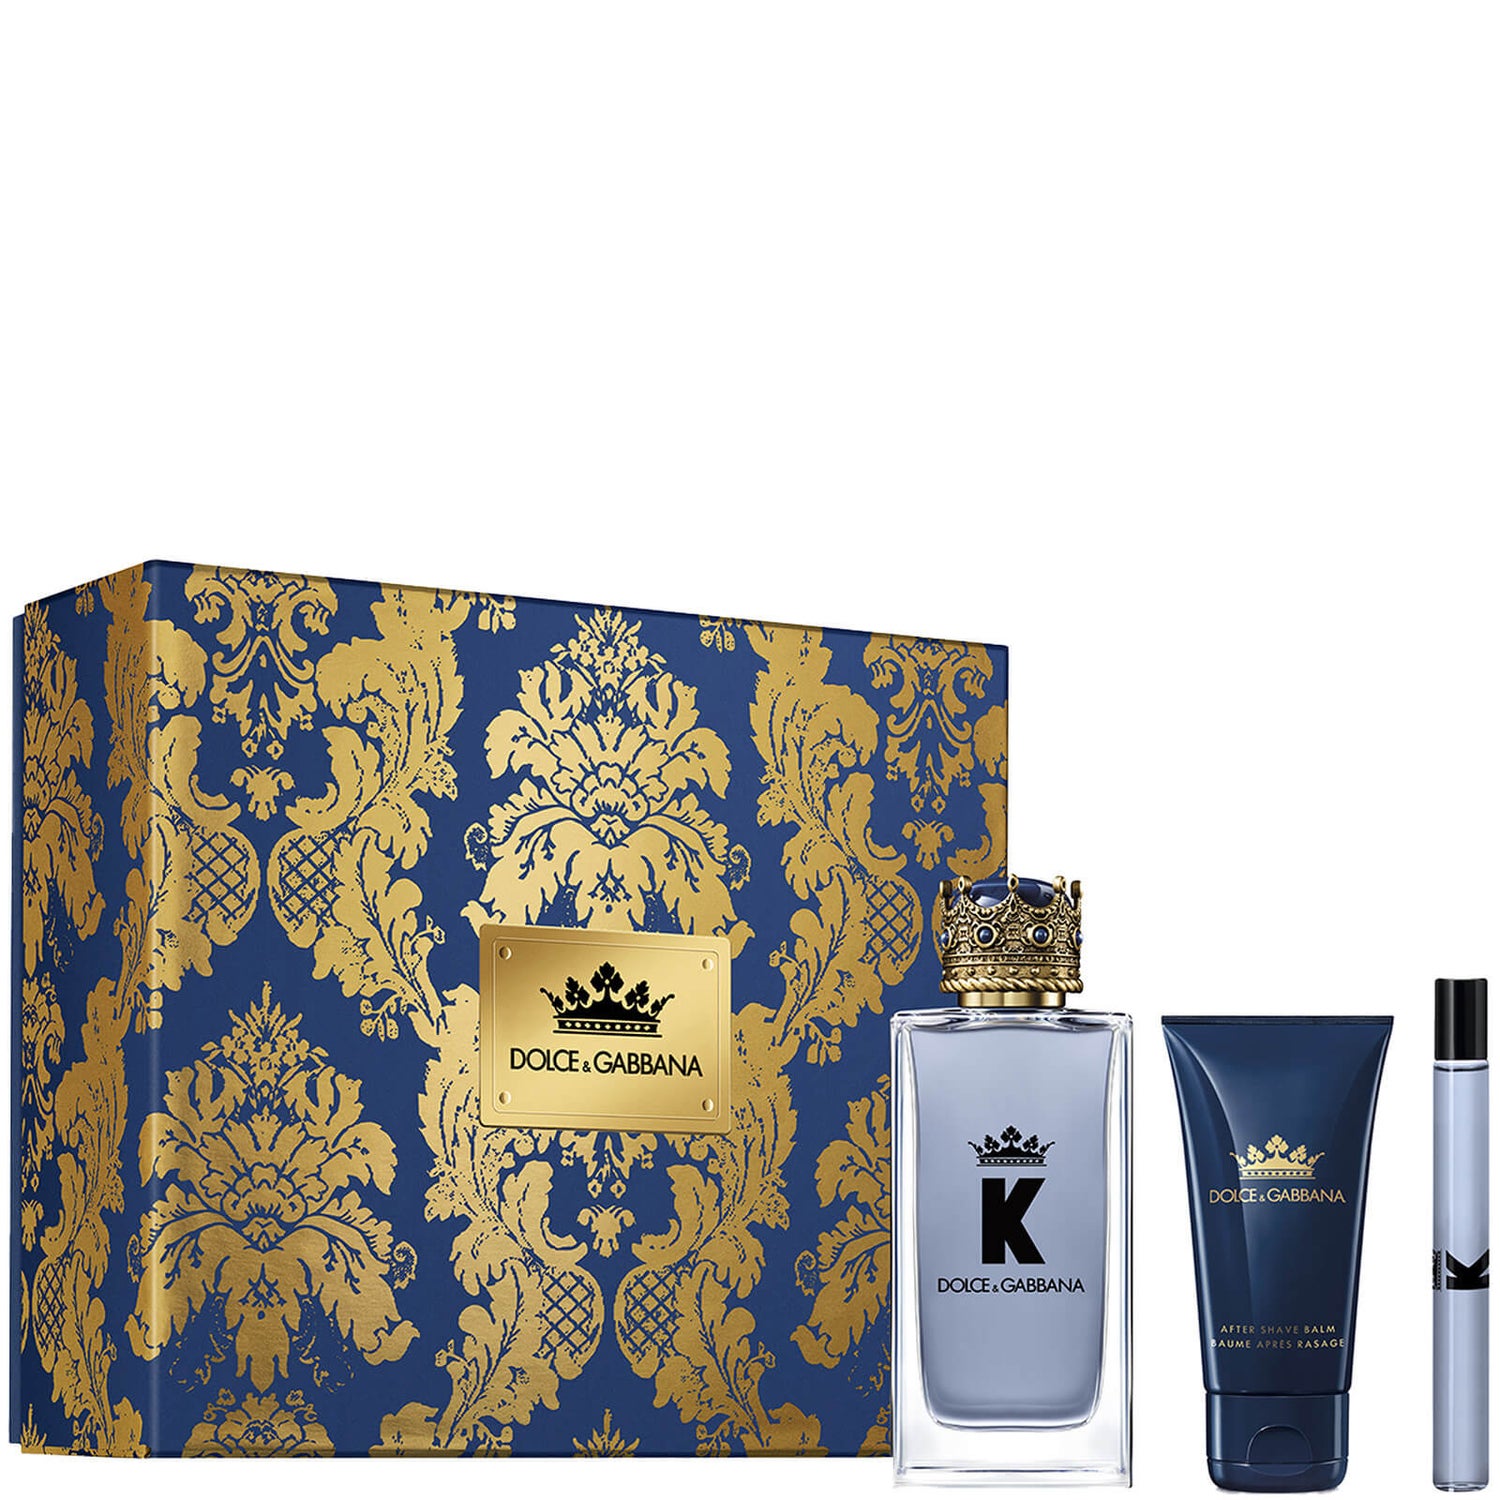 Dolce&Gabbana Exclusive K Eau de Toilette Set --tuoksusetti, 100 ml